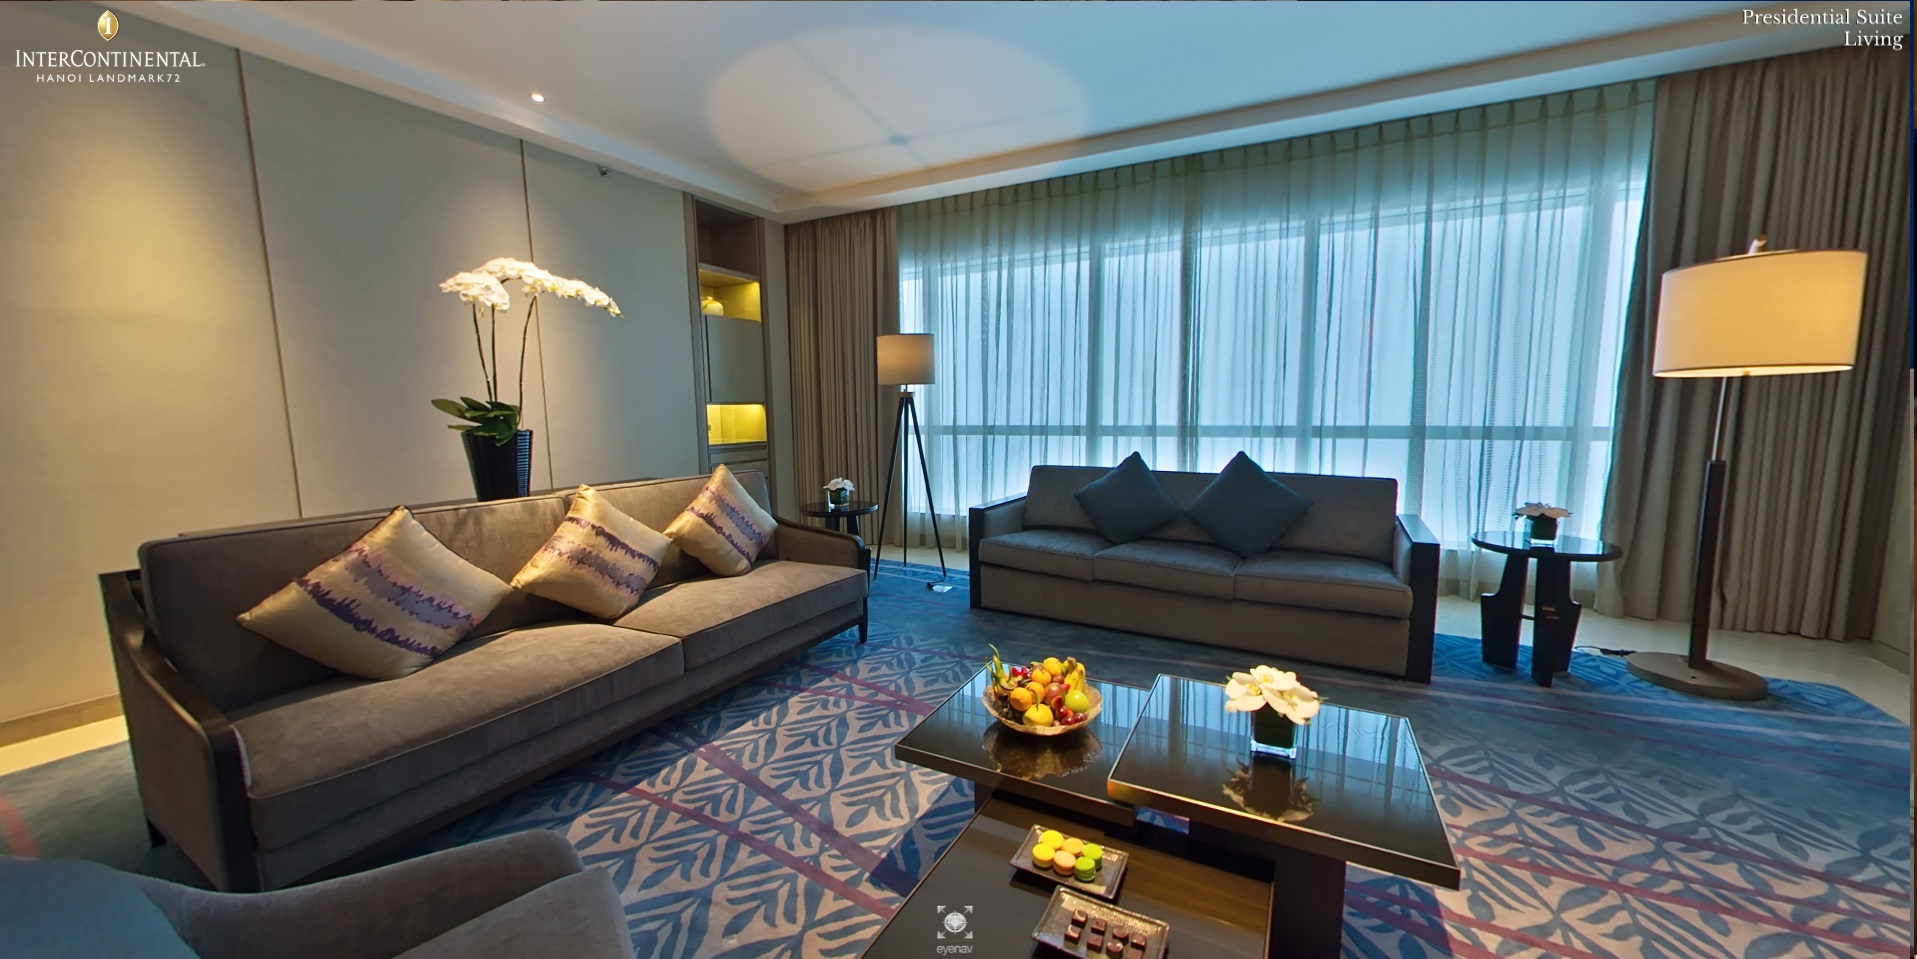 Hanoi hotel Presidential Suite living room